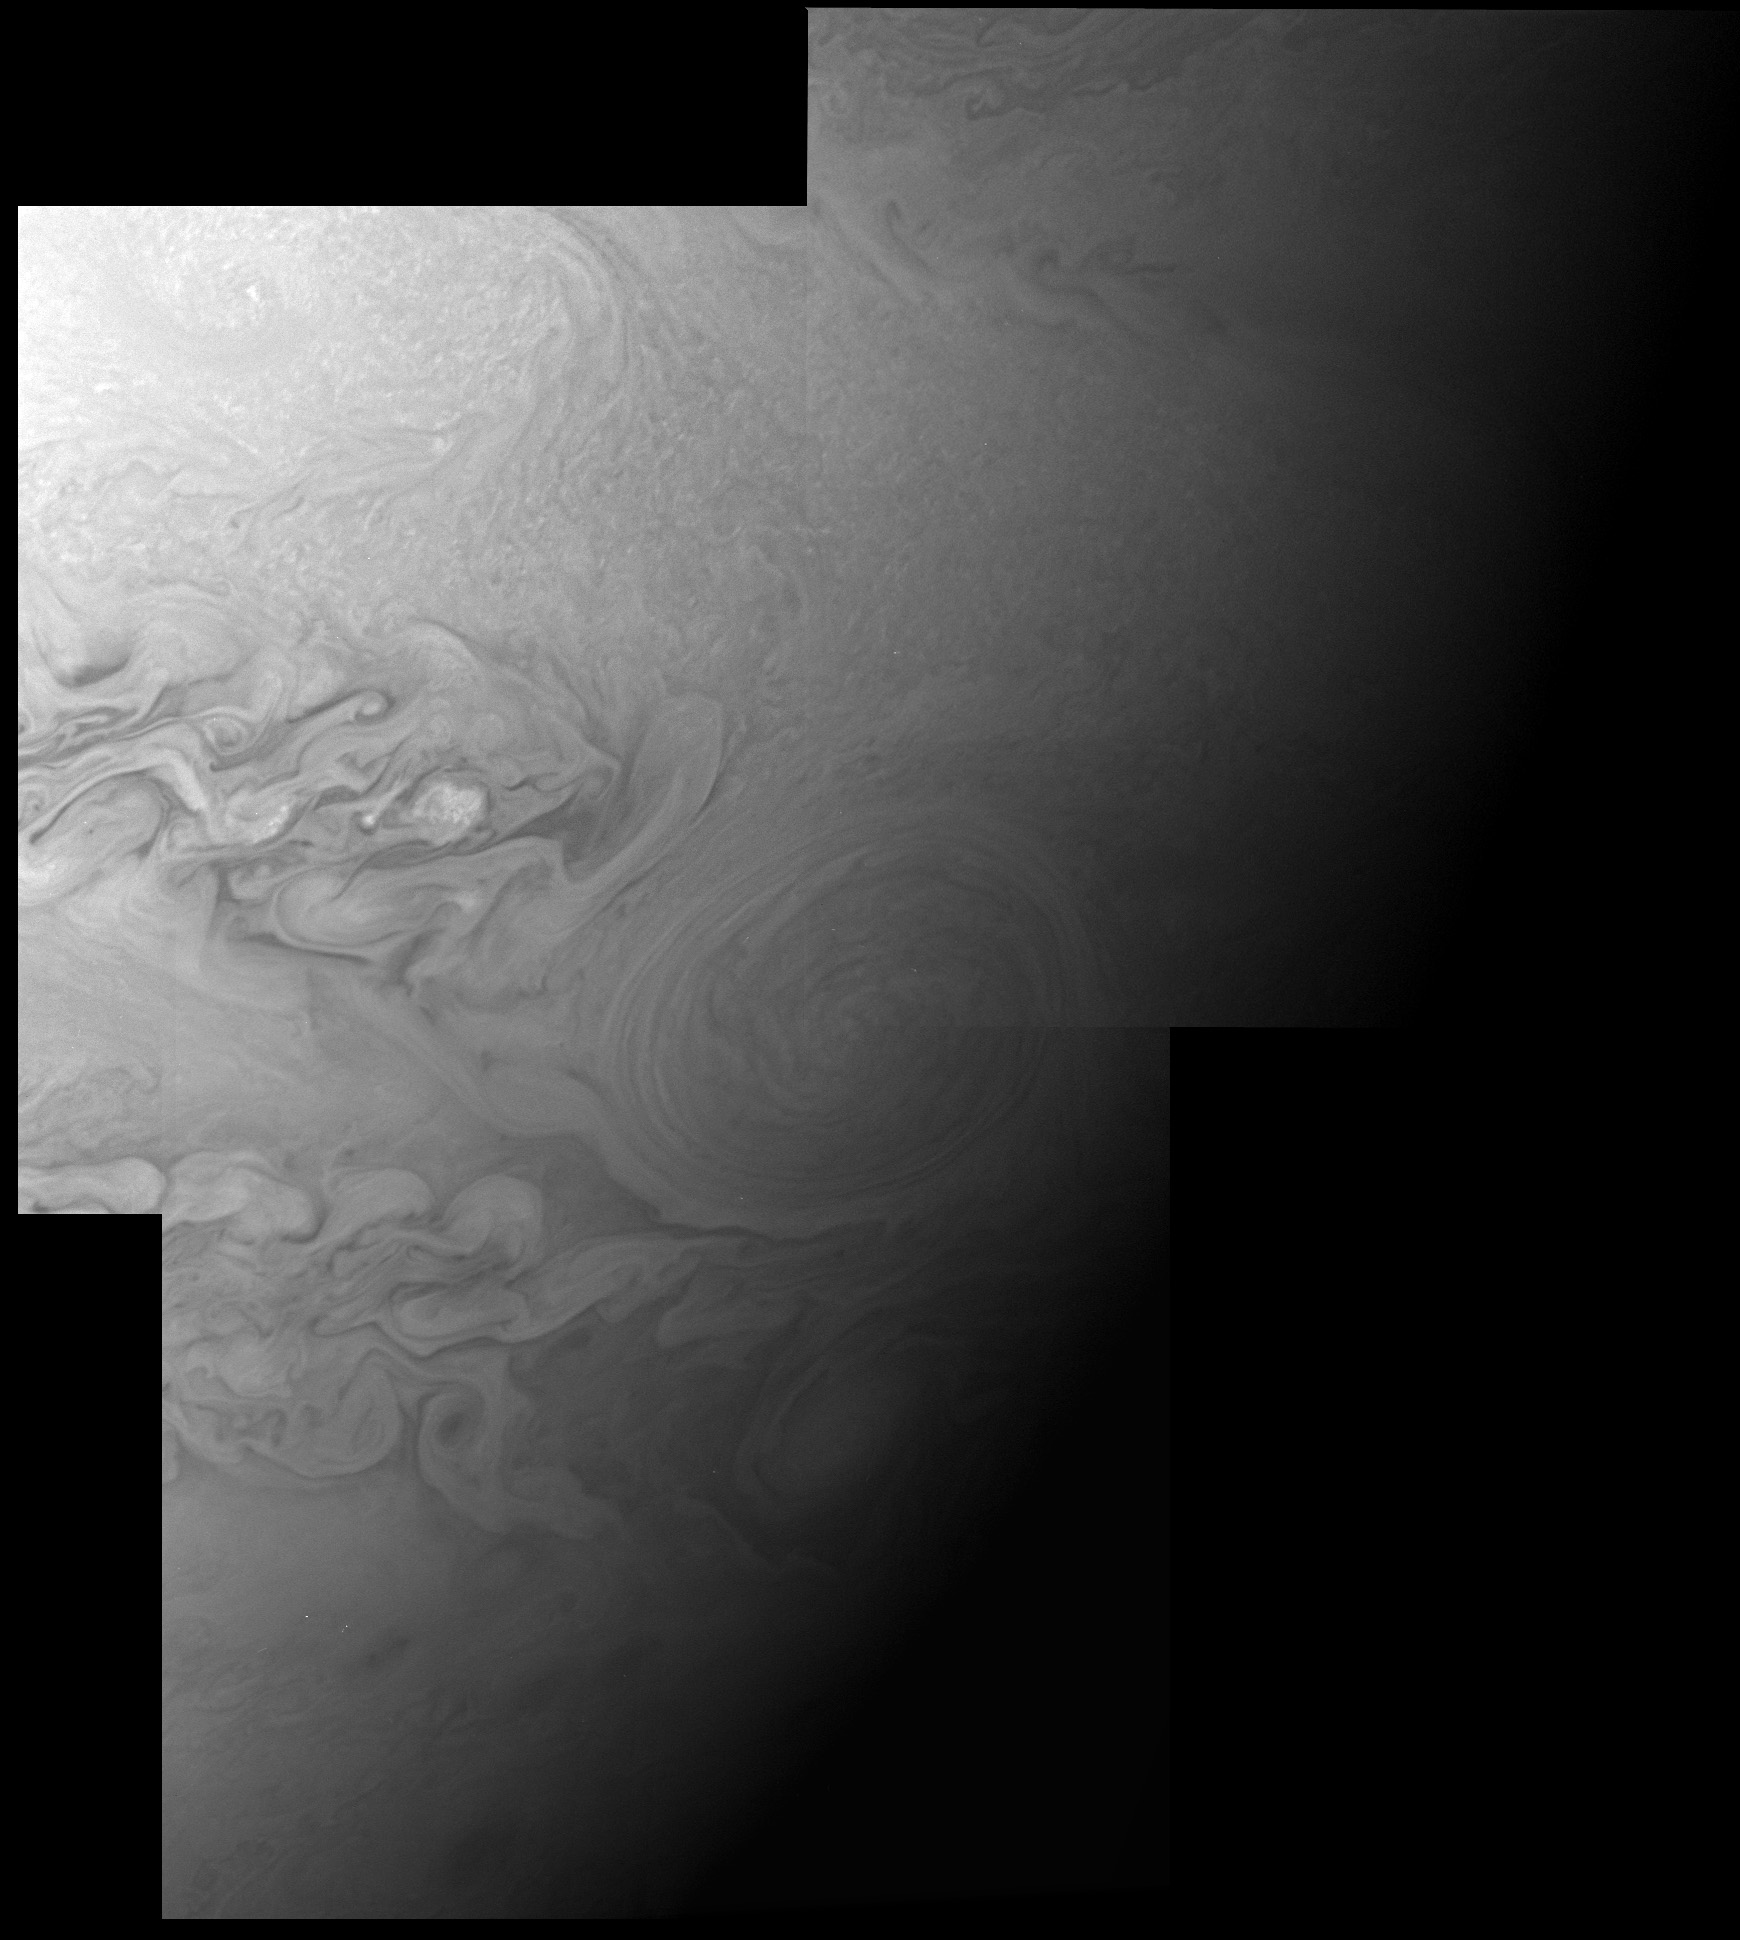 Jupiter's Little Red Spot, Closest View Yet